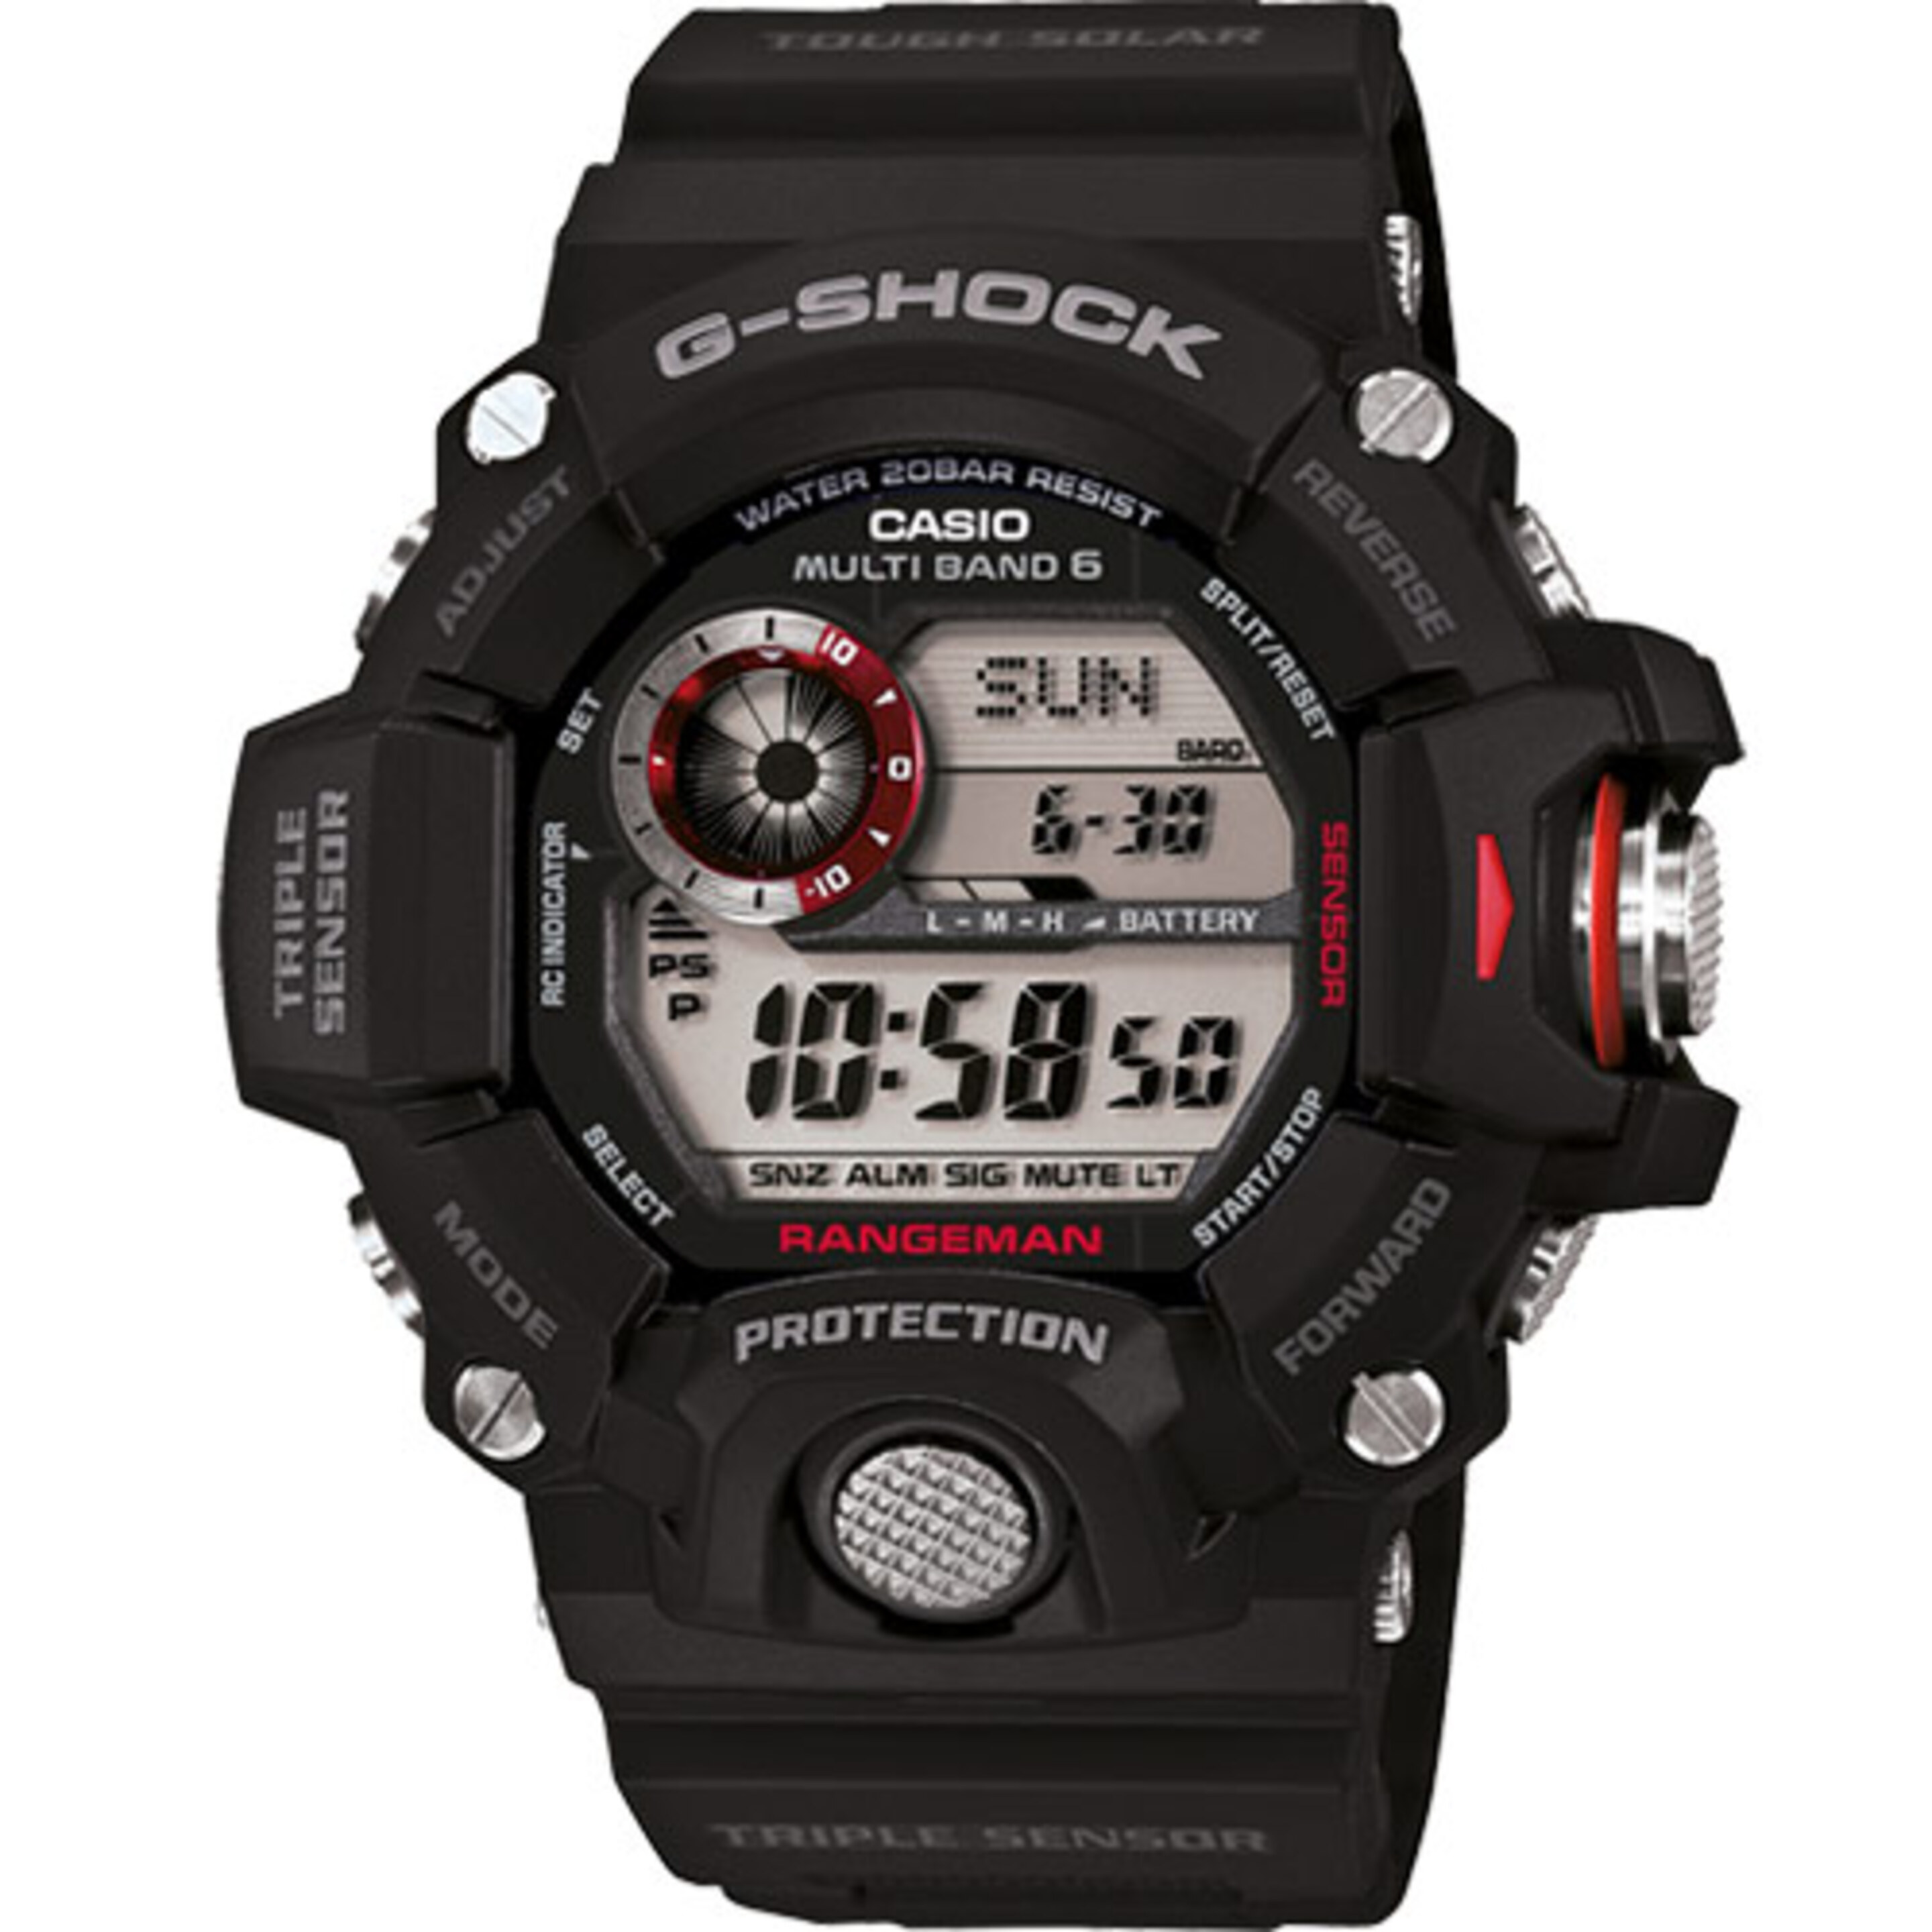 Reloj G-shock Rangeman Gw-9400-1er